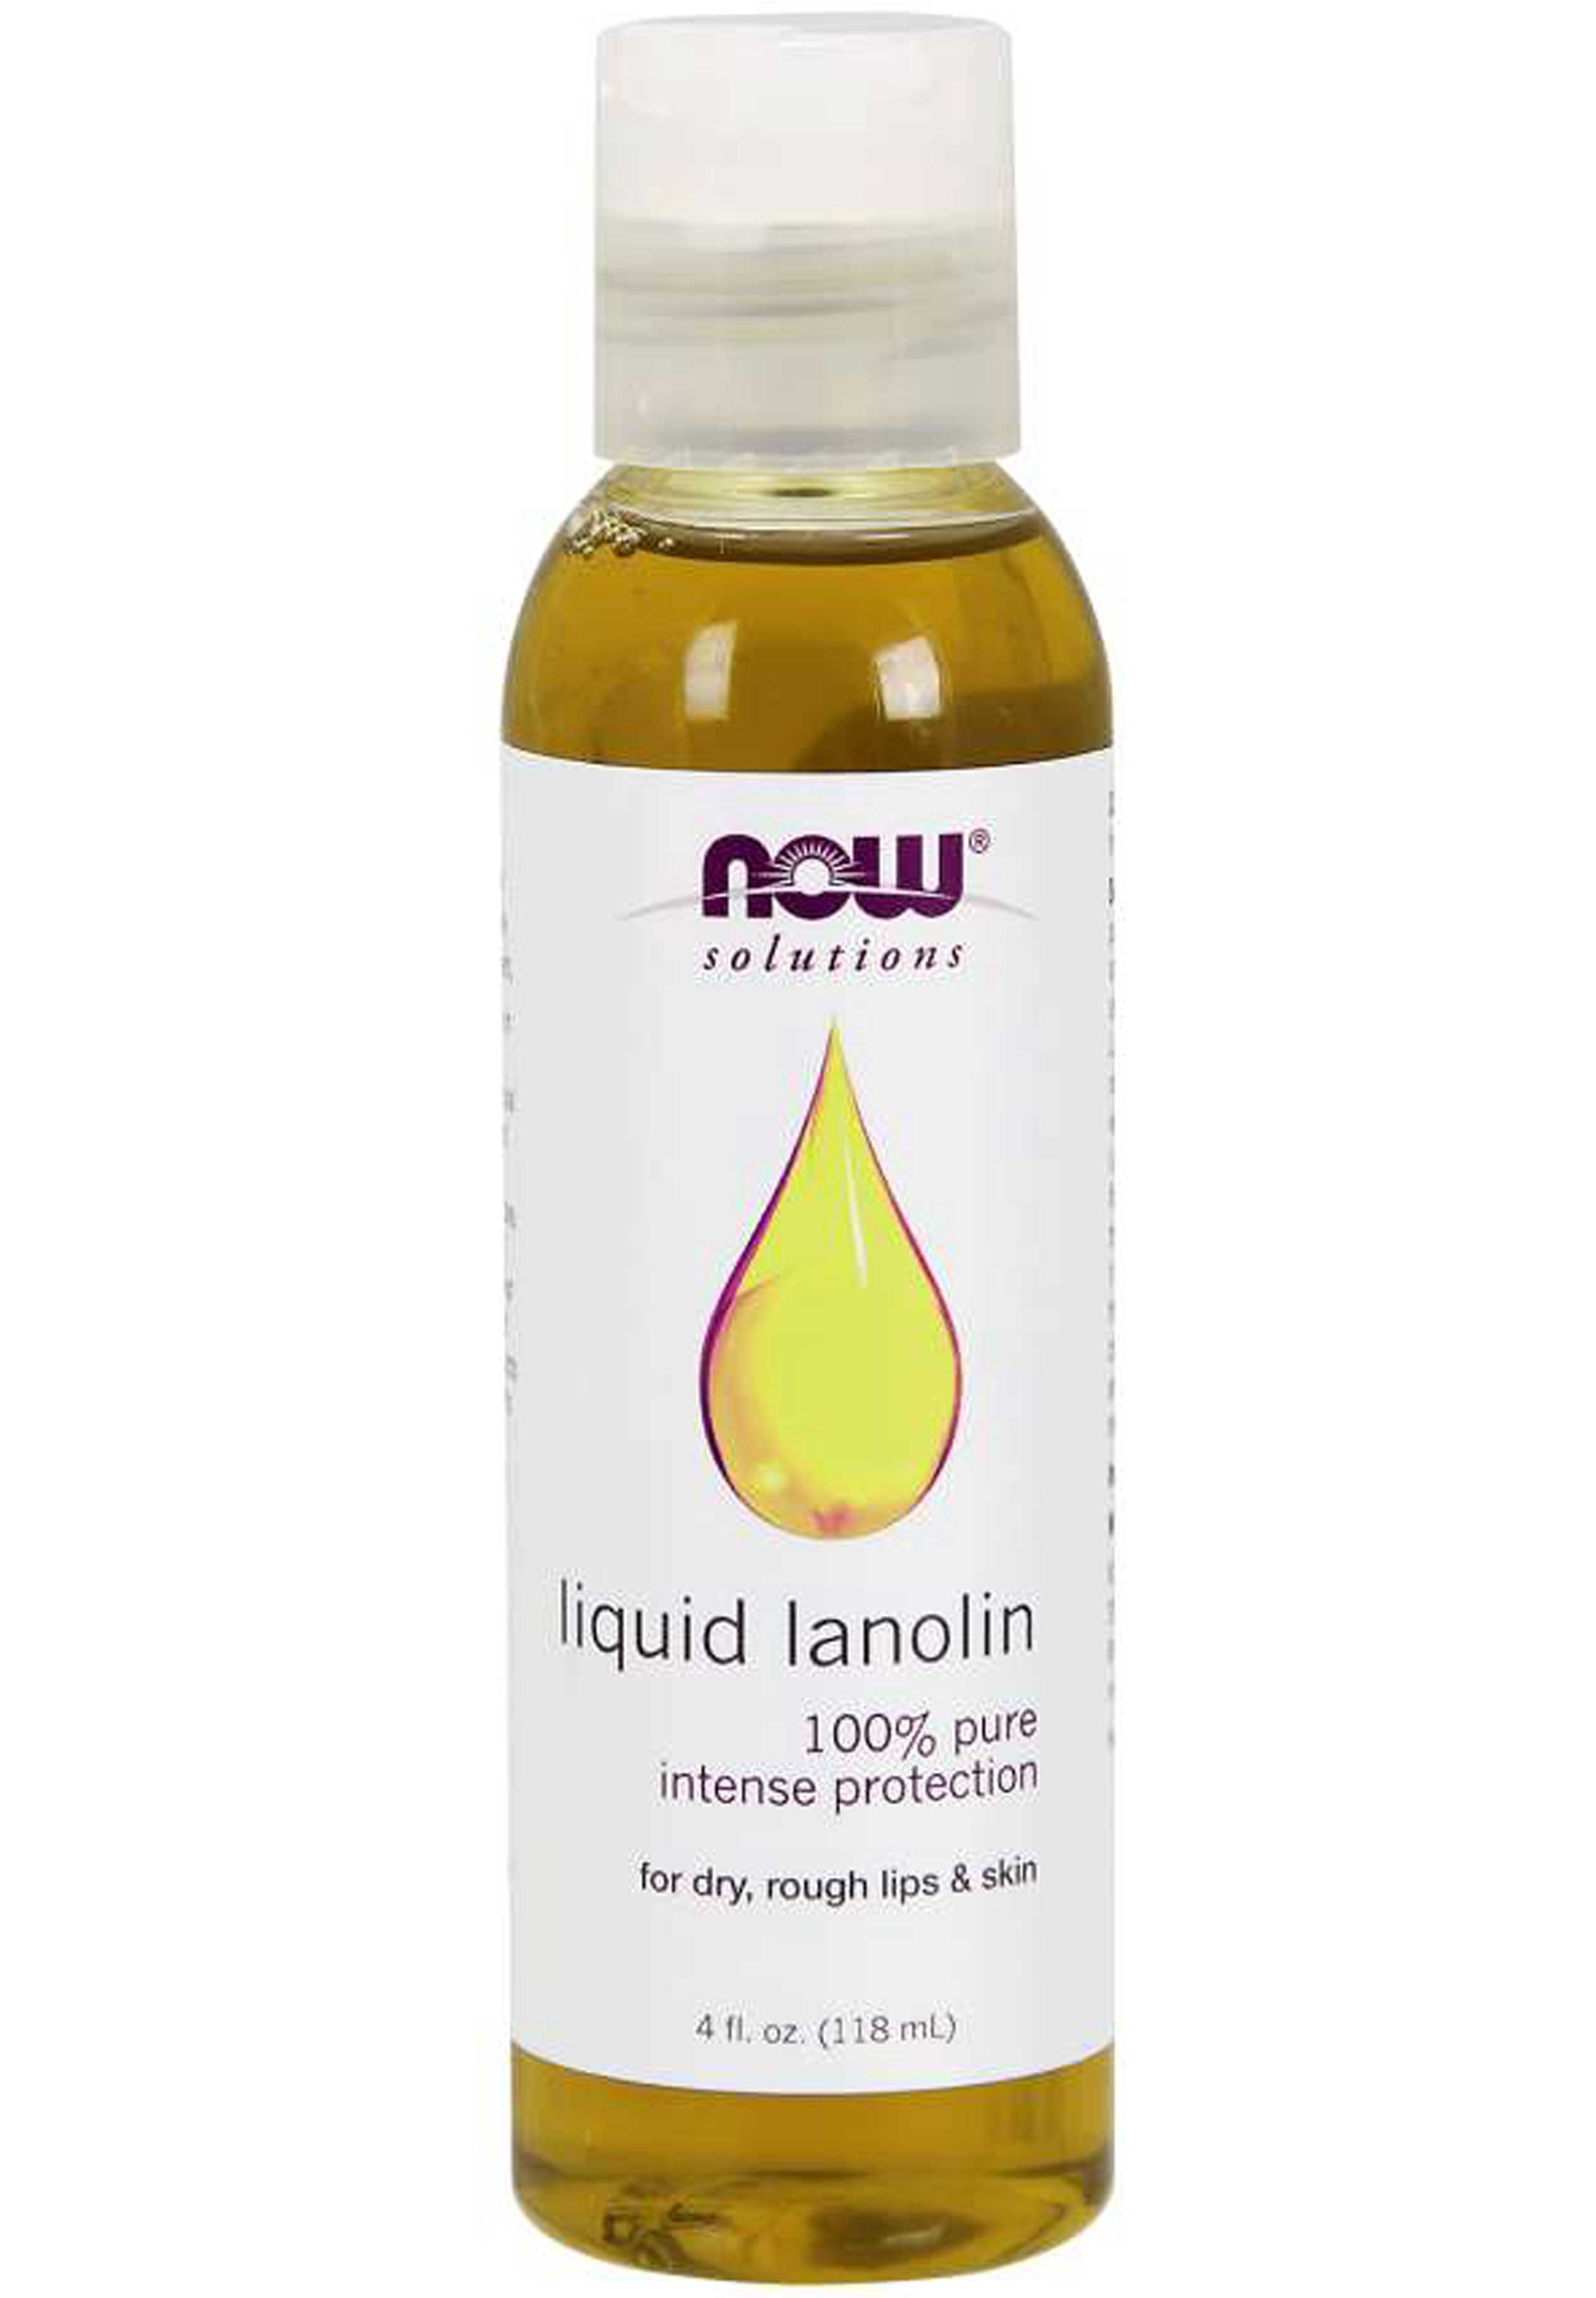 NOW Solutions Liquid Lanolin, Pure